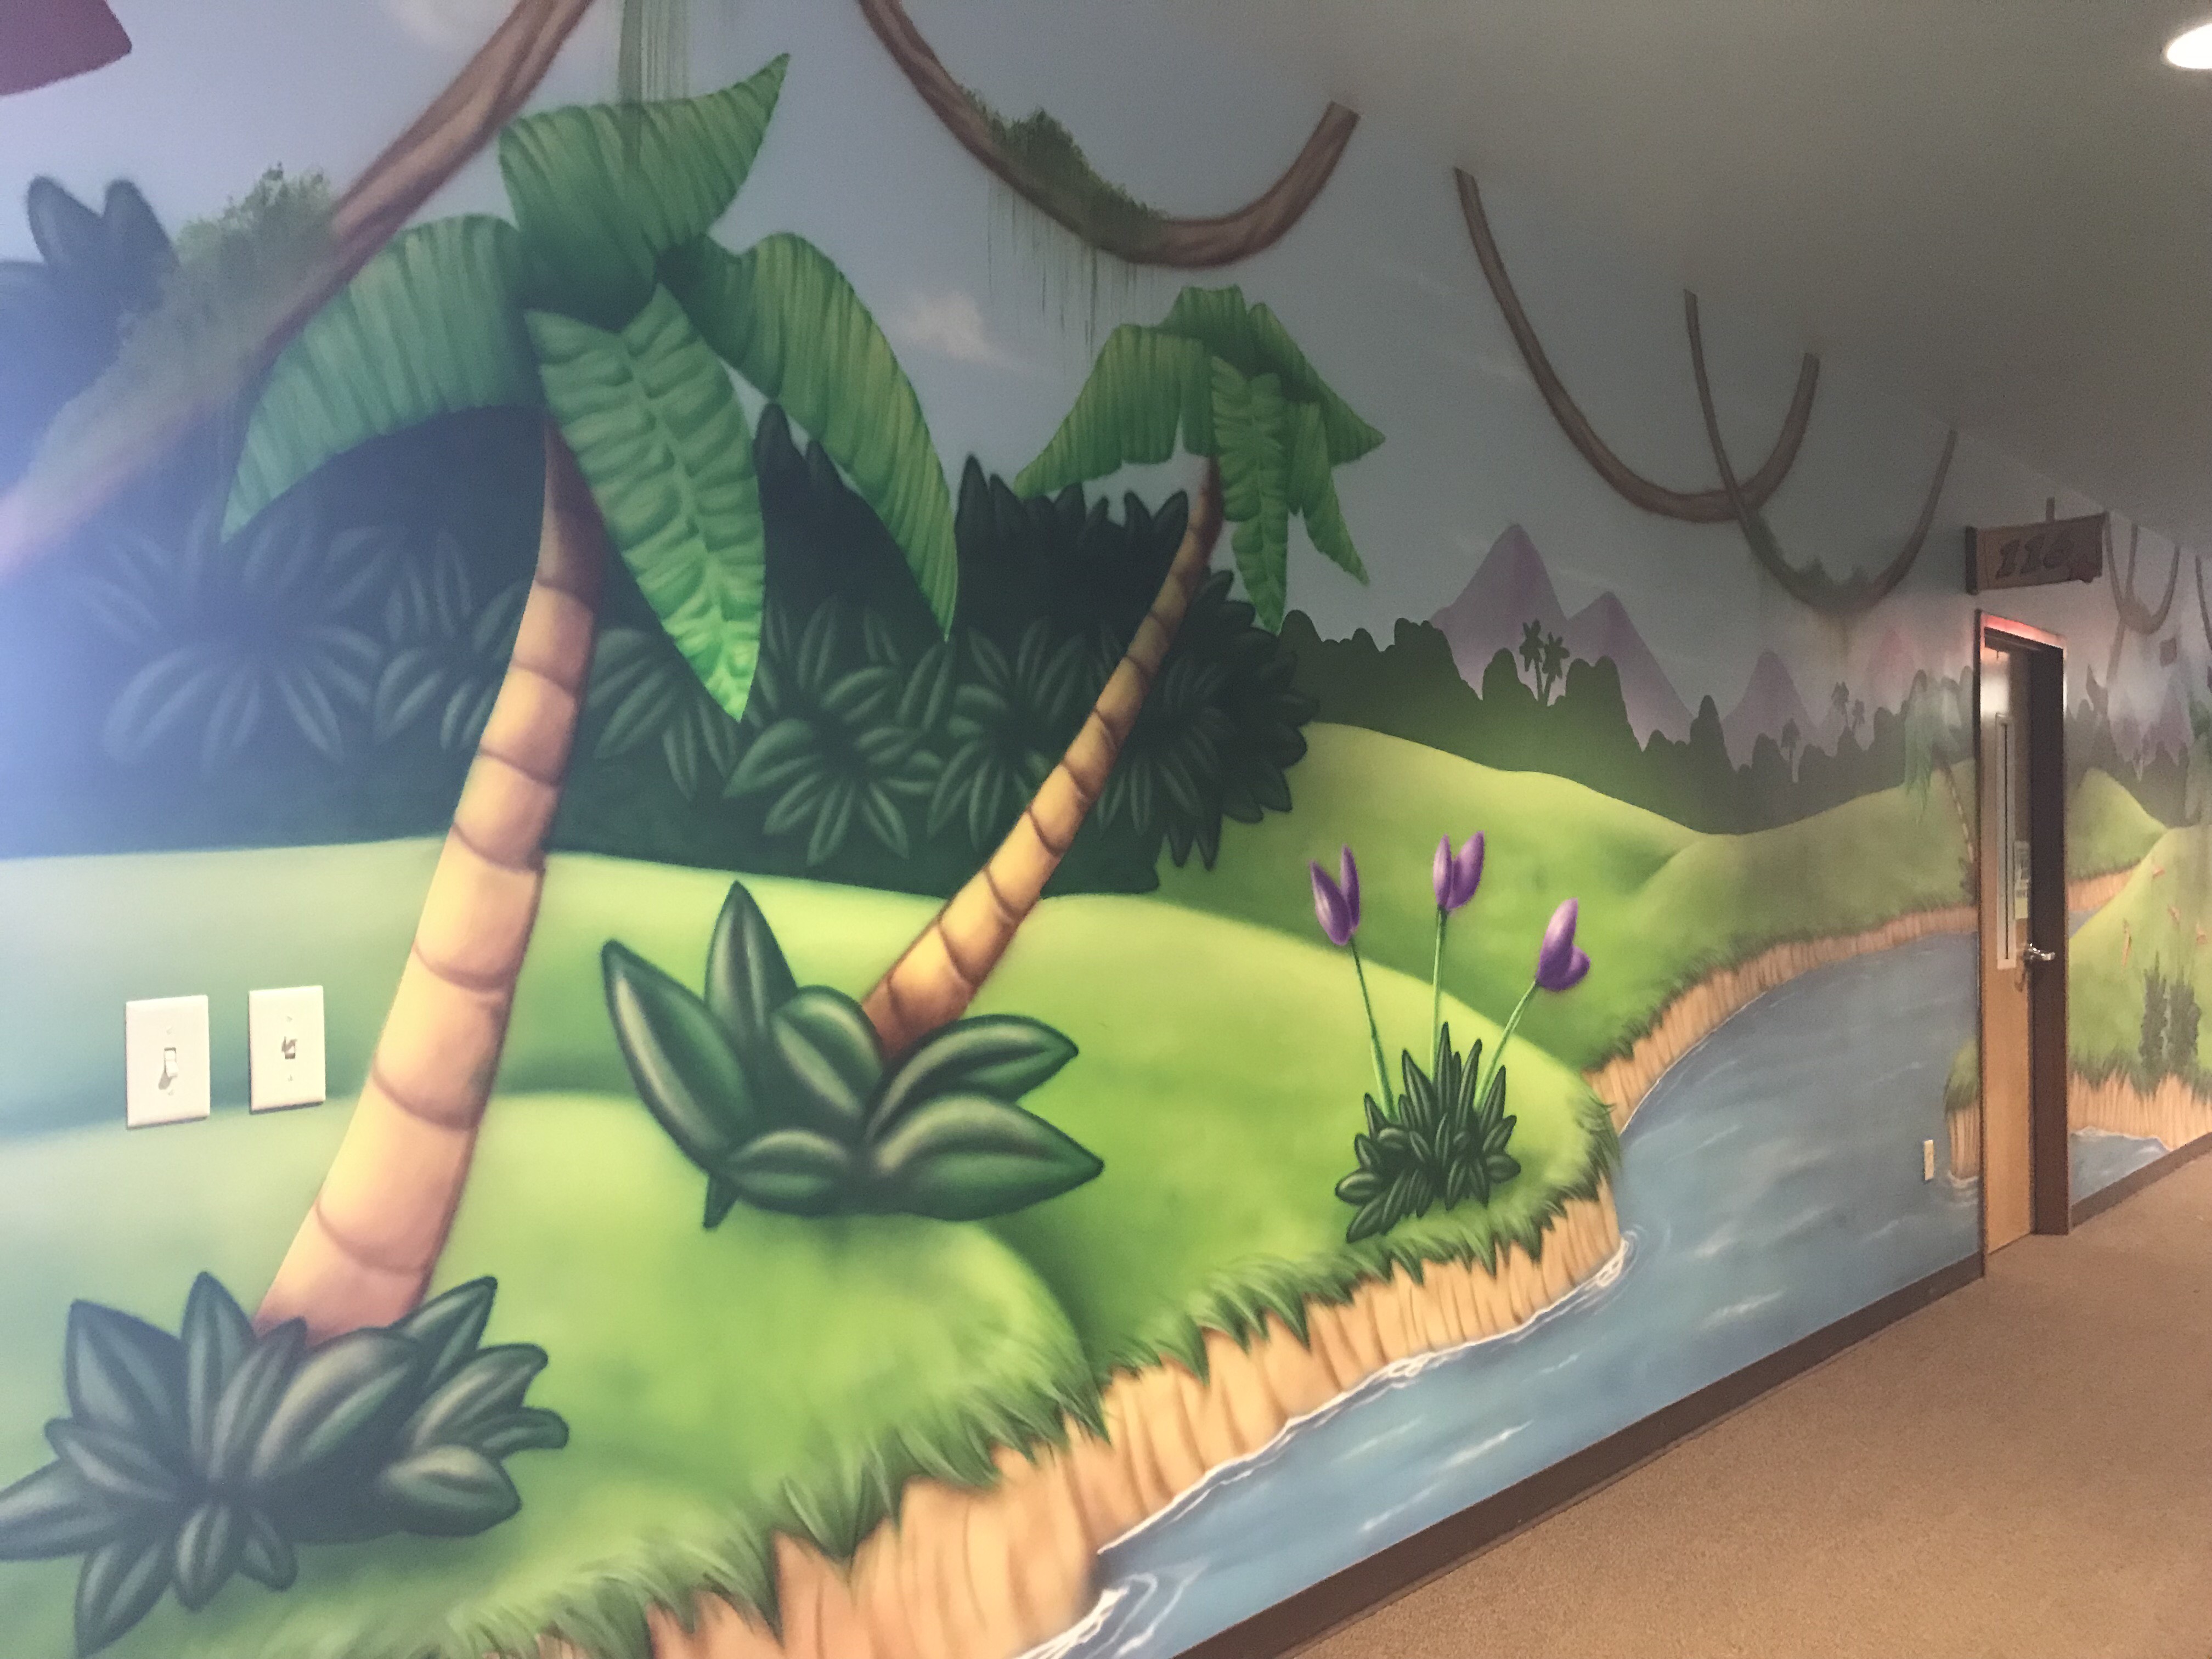 children's ministry room designs jungle hallway